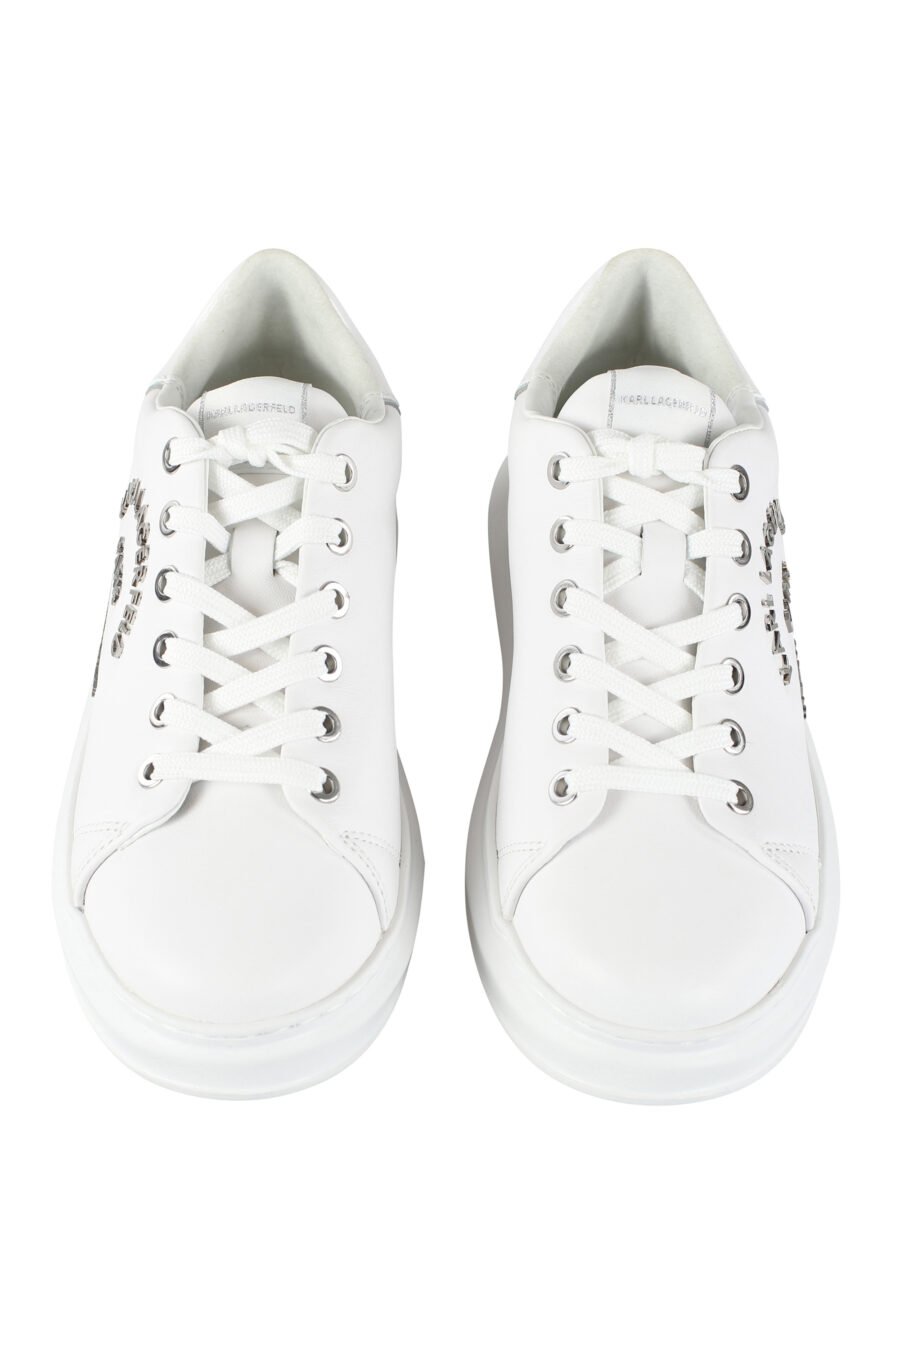 Zapatillas blancas con logo lettering "rue st guillaume" plateado - IMG 9621 1